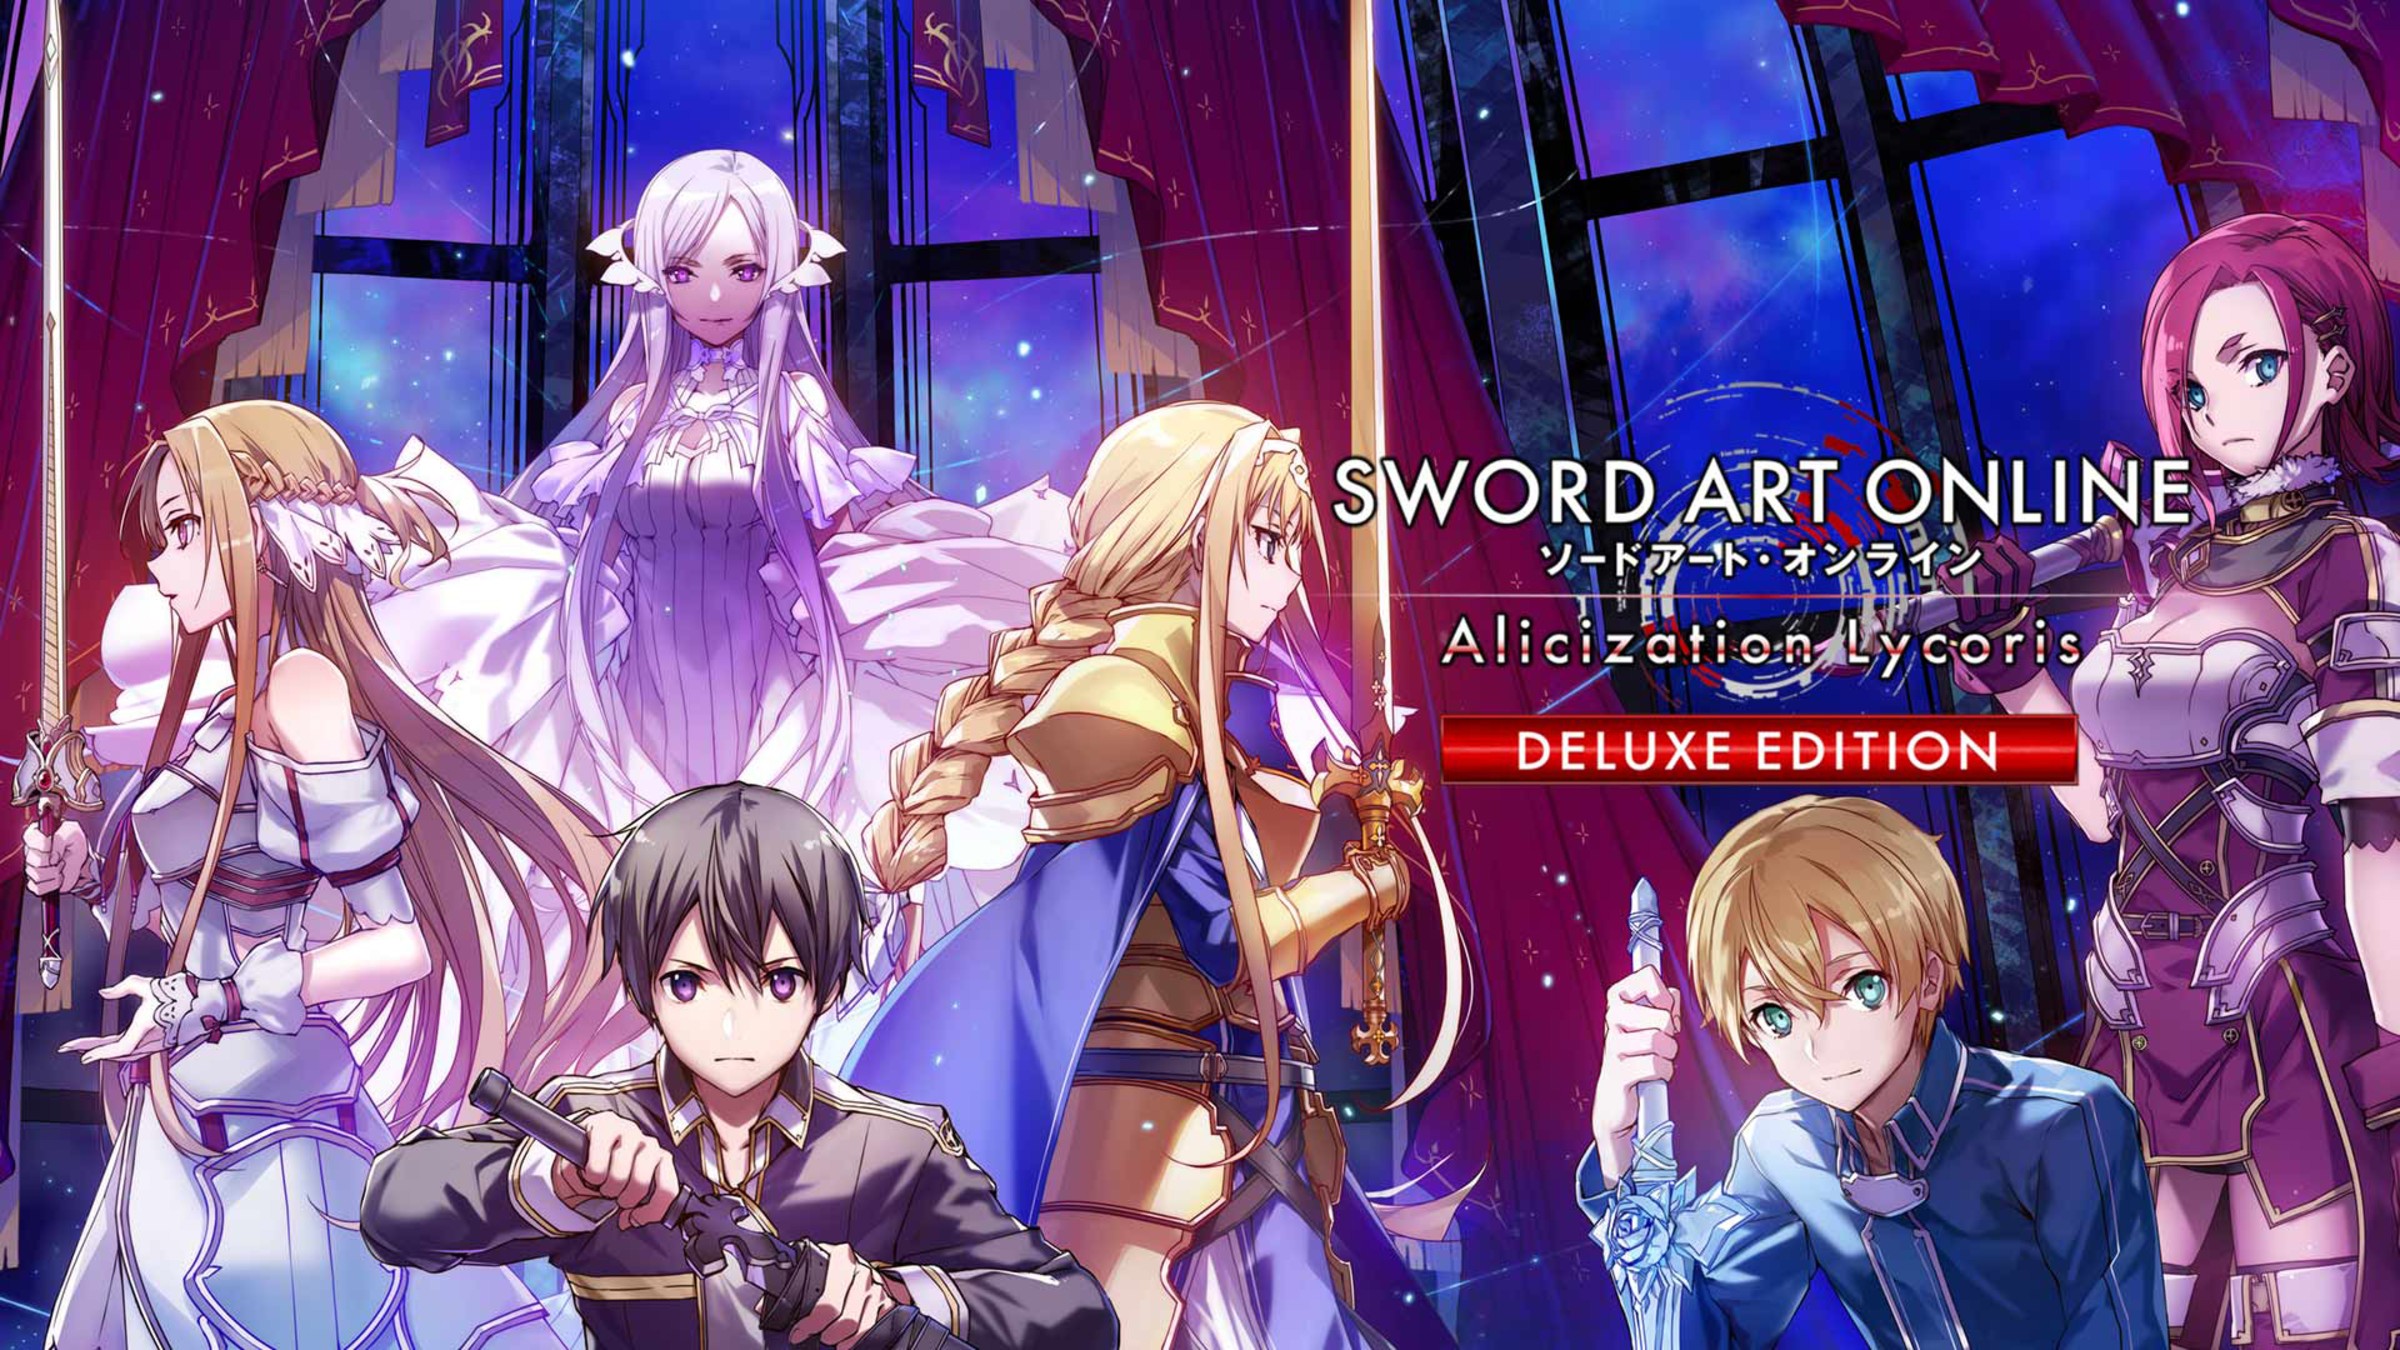 SWORD ART ONLINE Alicization Lycoris for Nintendo Switch